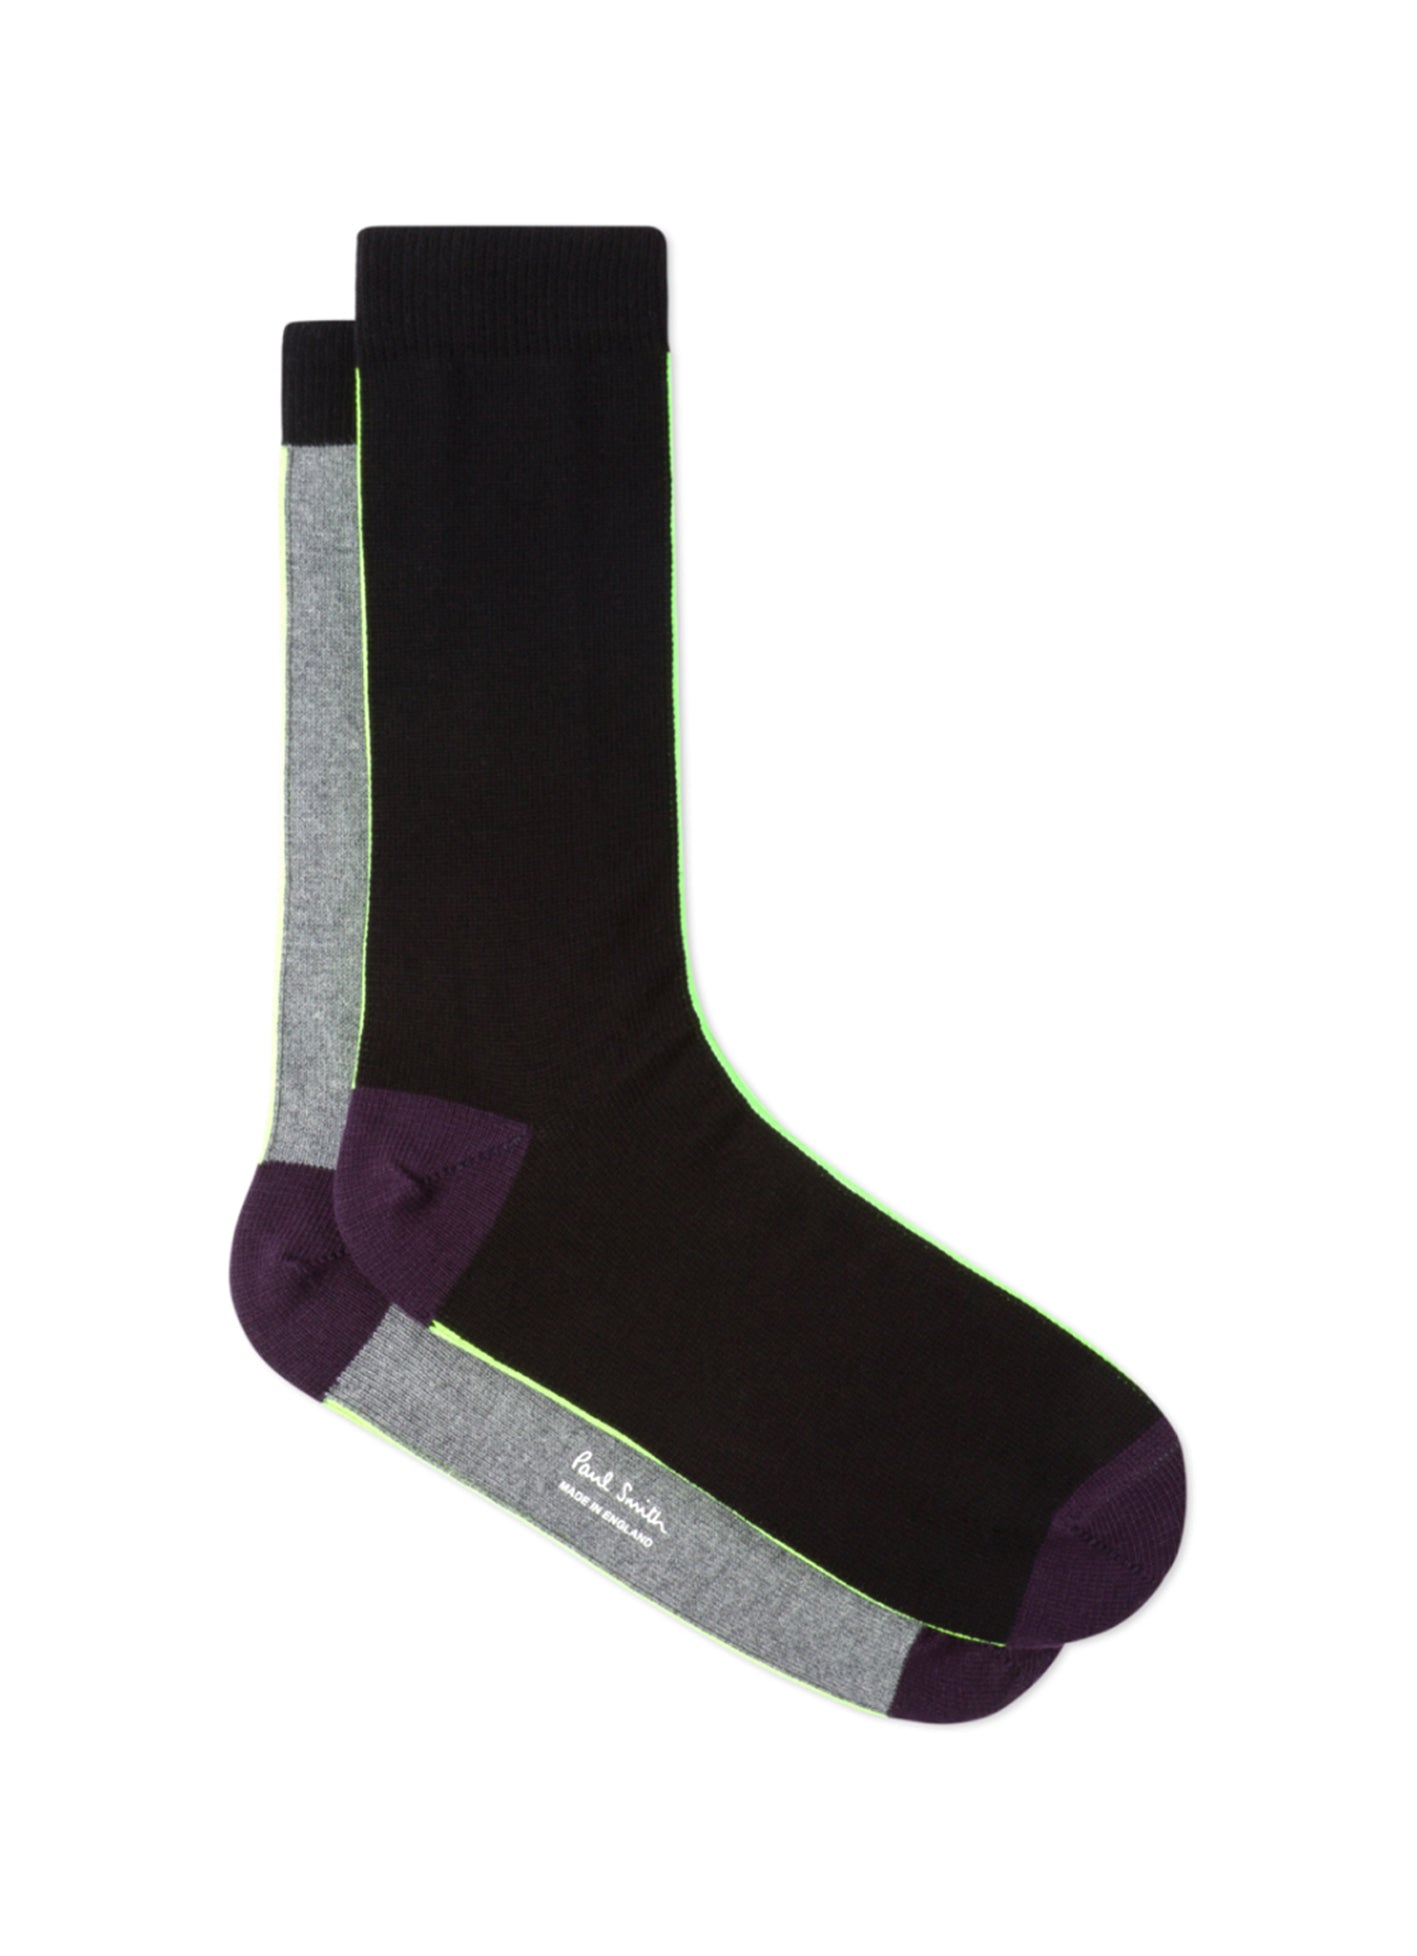 PAUL SMITH  Black And Grey Vertical Stripe Socks